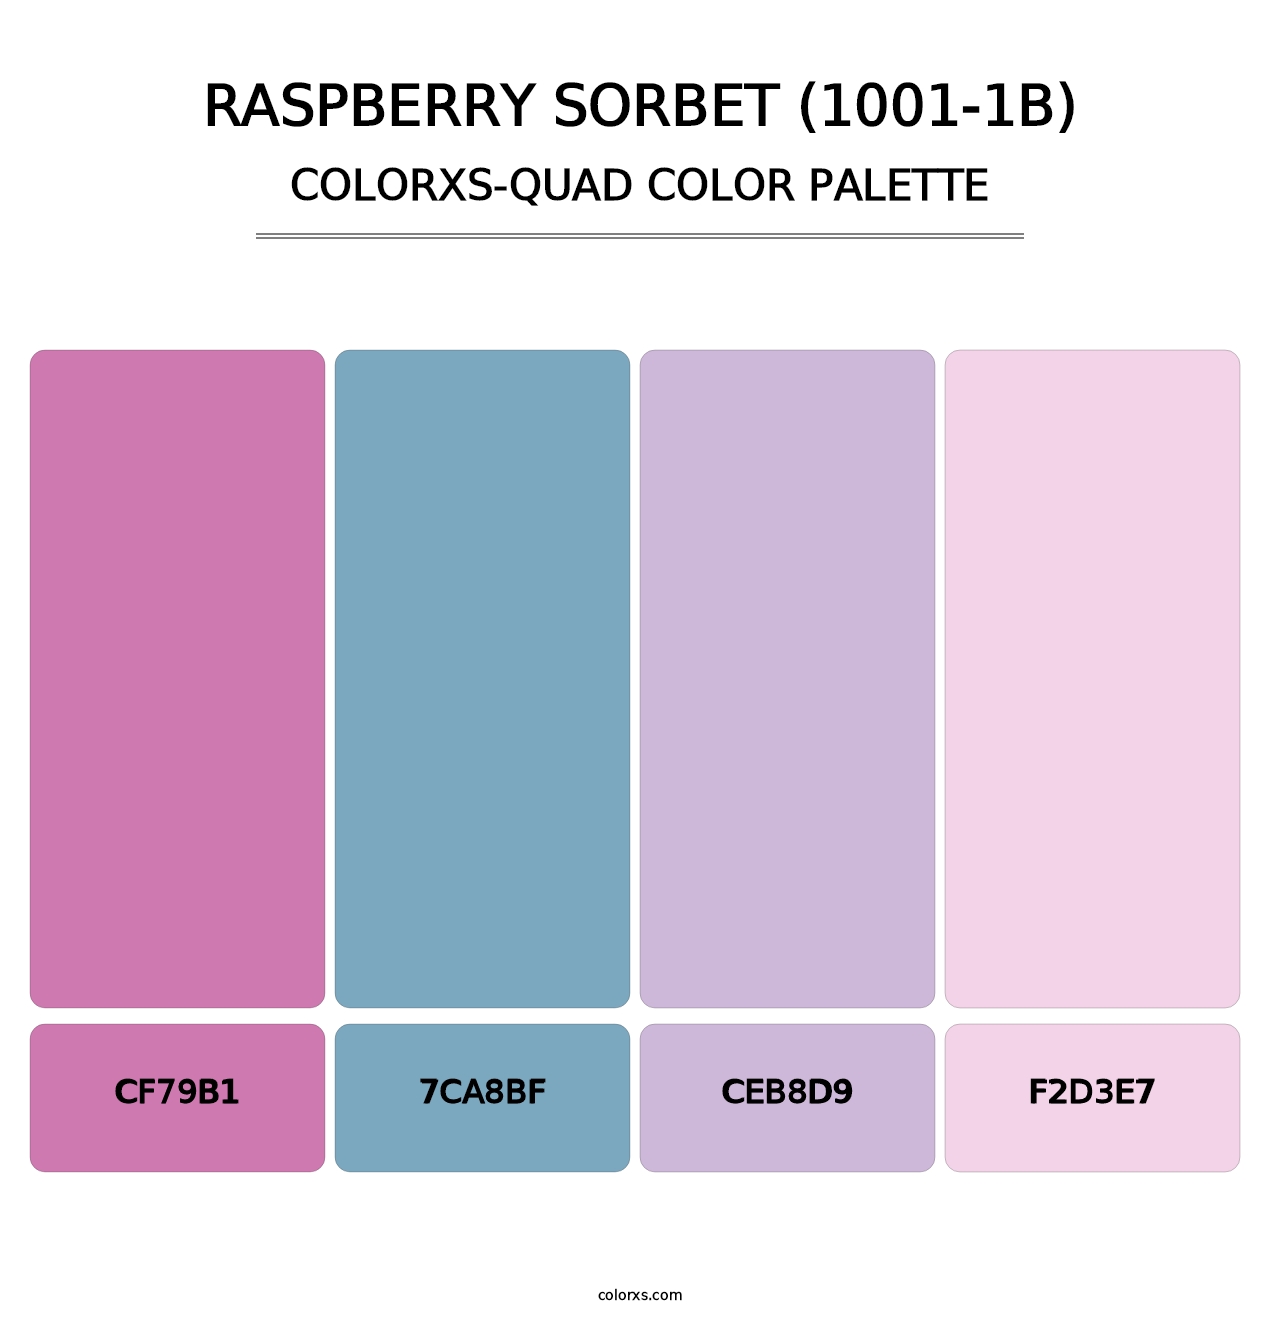 Raspberry Sorbet (1001-1B) - Colorxs Quad Palette